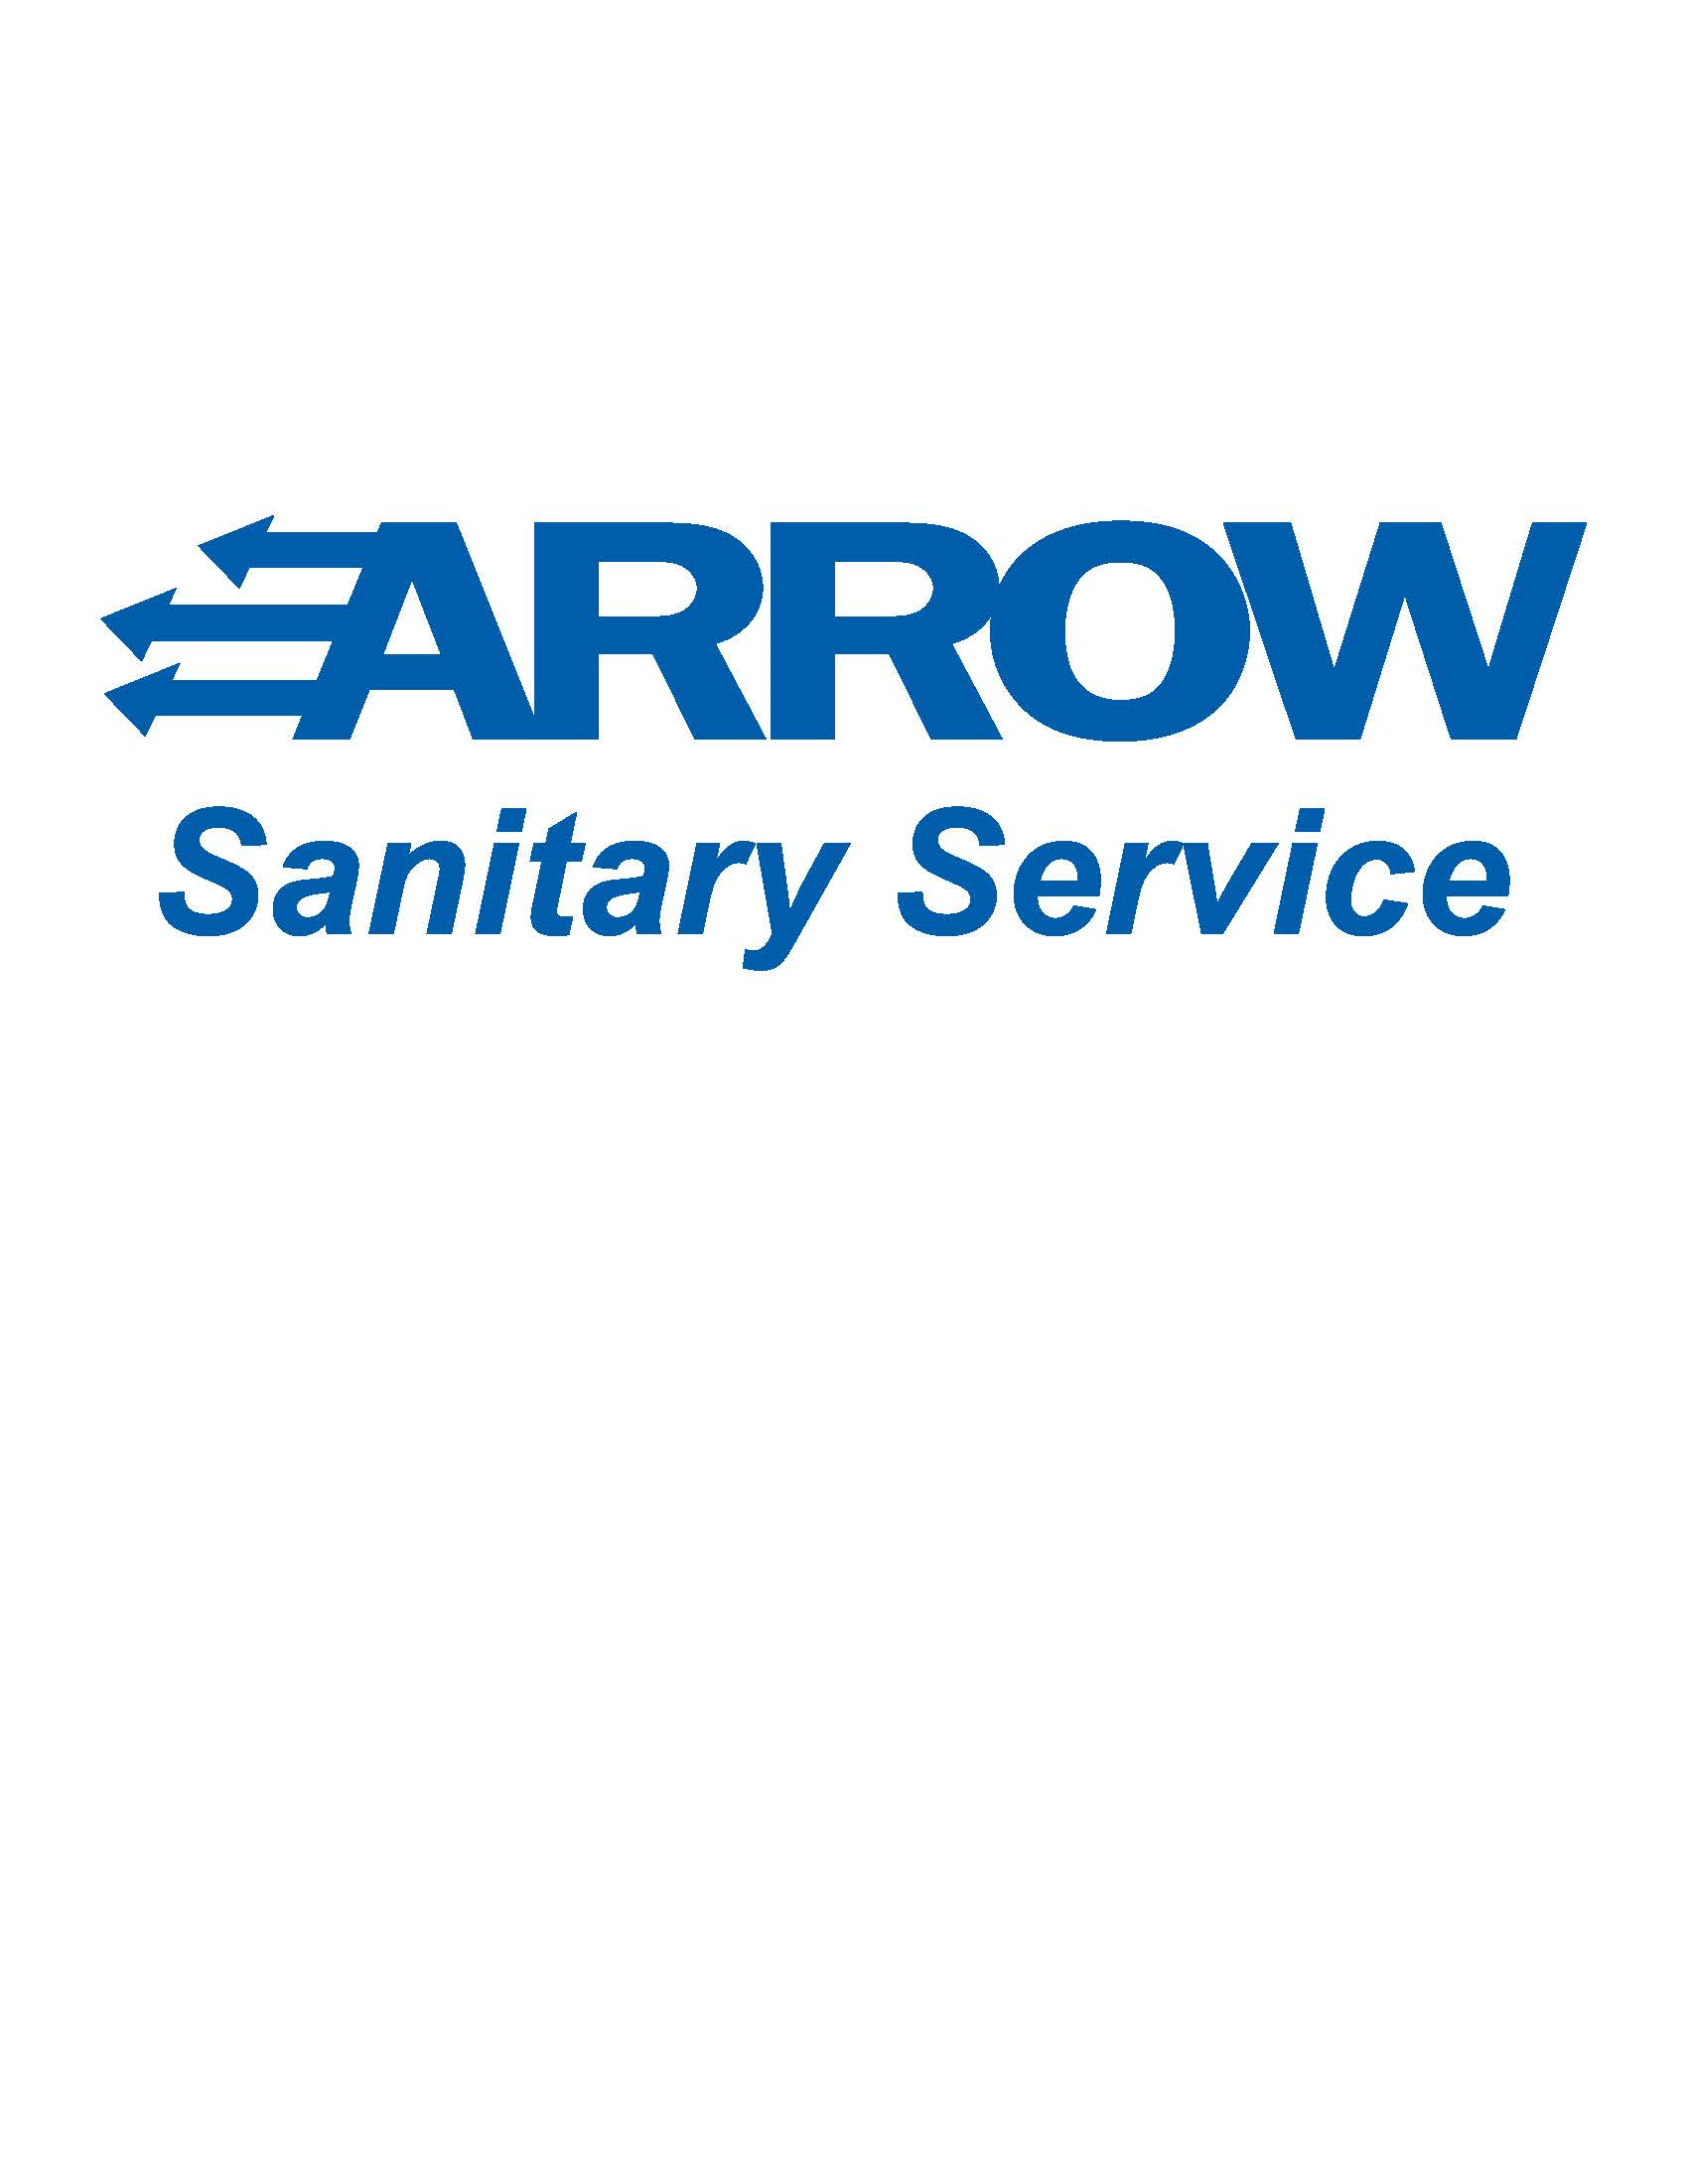 Arrow Sanitary Service logo